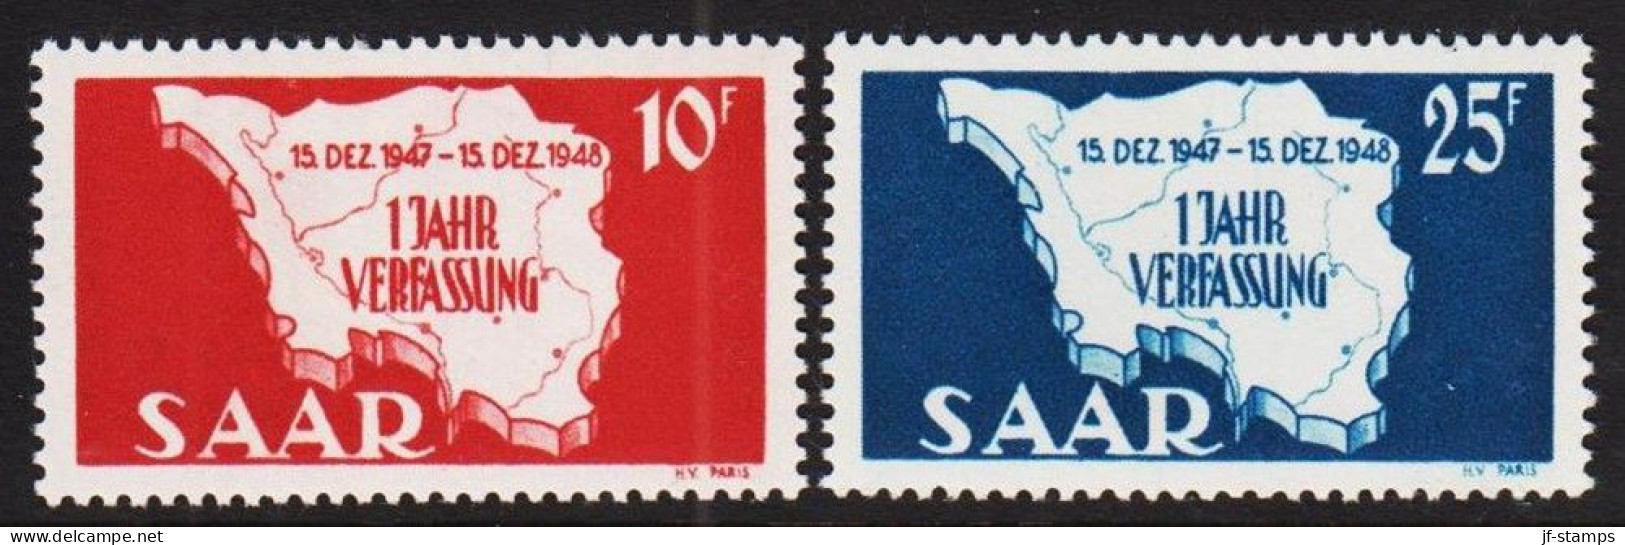 1948. SAAR. 1 JAHR VERFASSUNG Complete Set. NEVER Hinged.  (Michel 260-261) - JF544482 - Unused Stamps